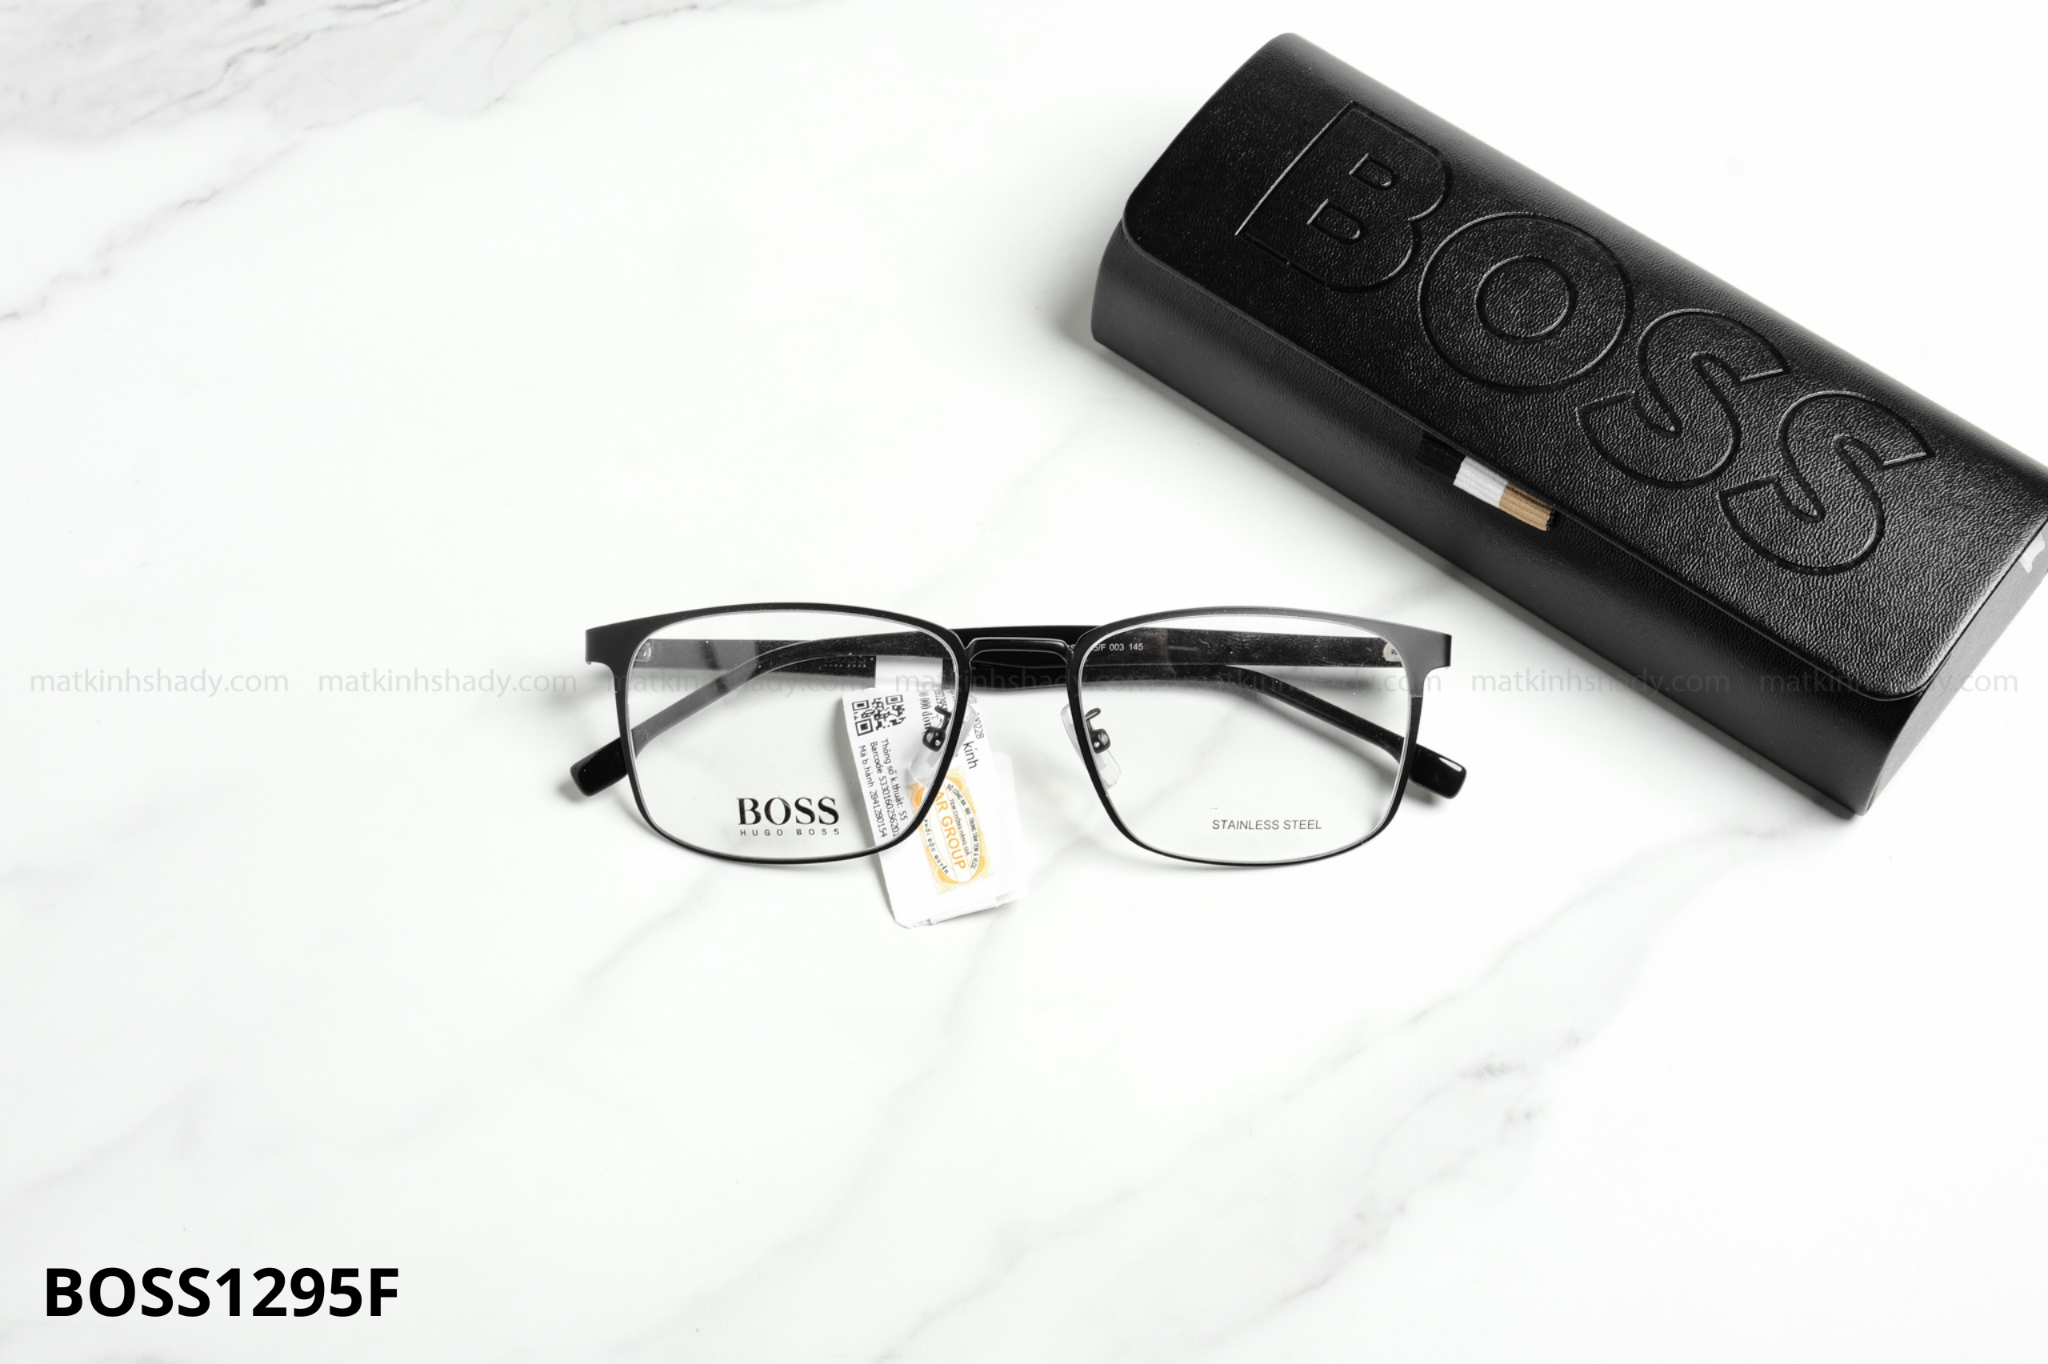  Boss Eyewear - Glasses - Boss1295F 